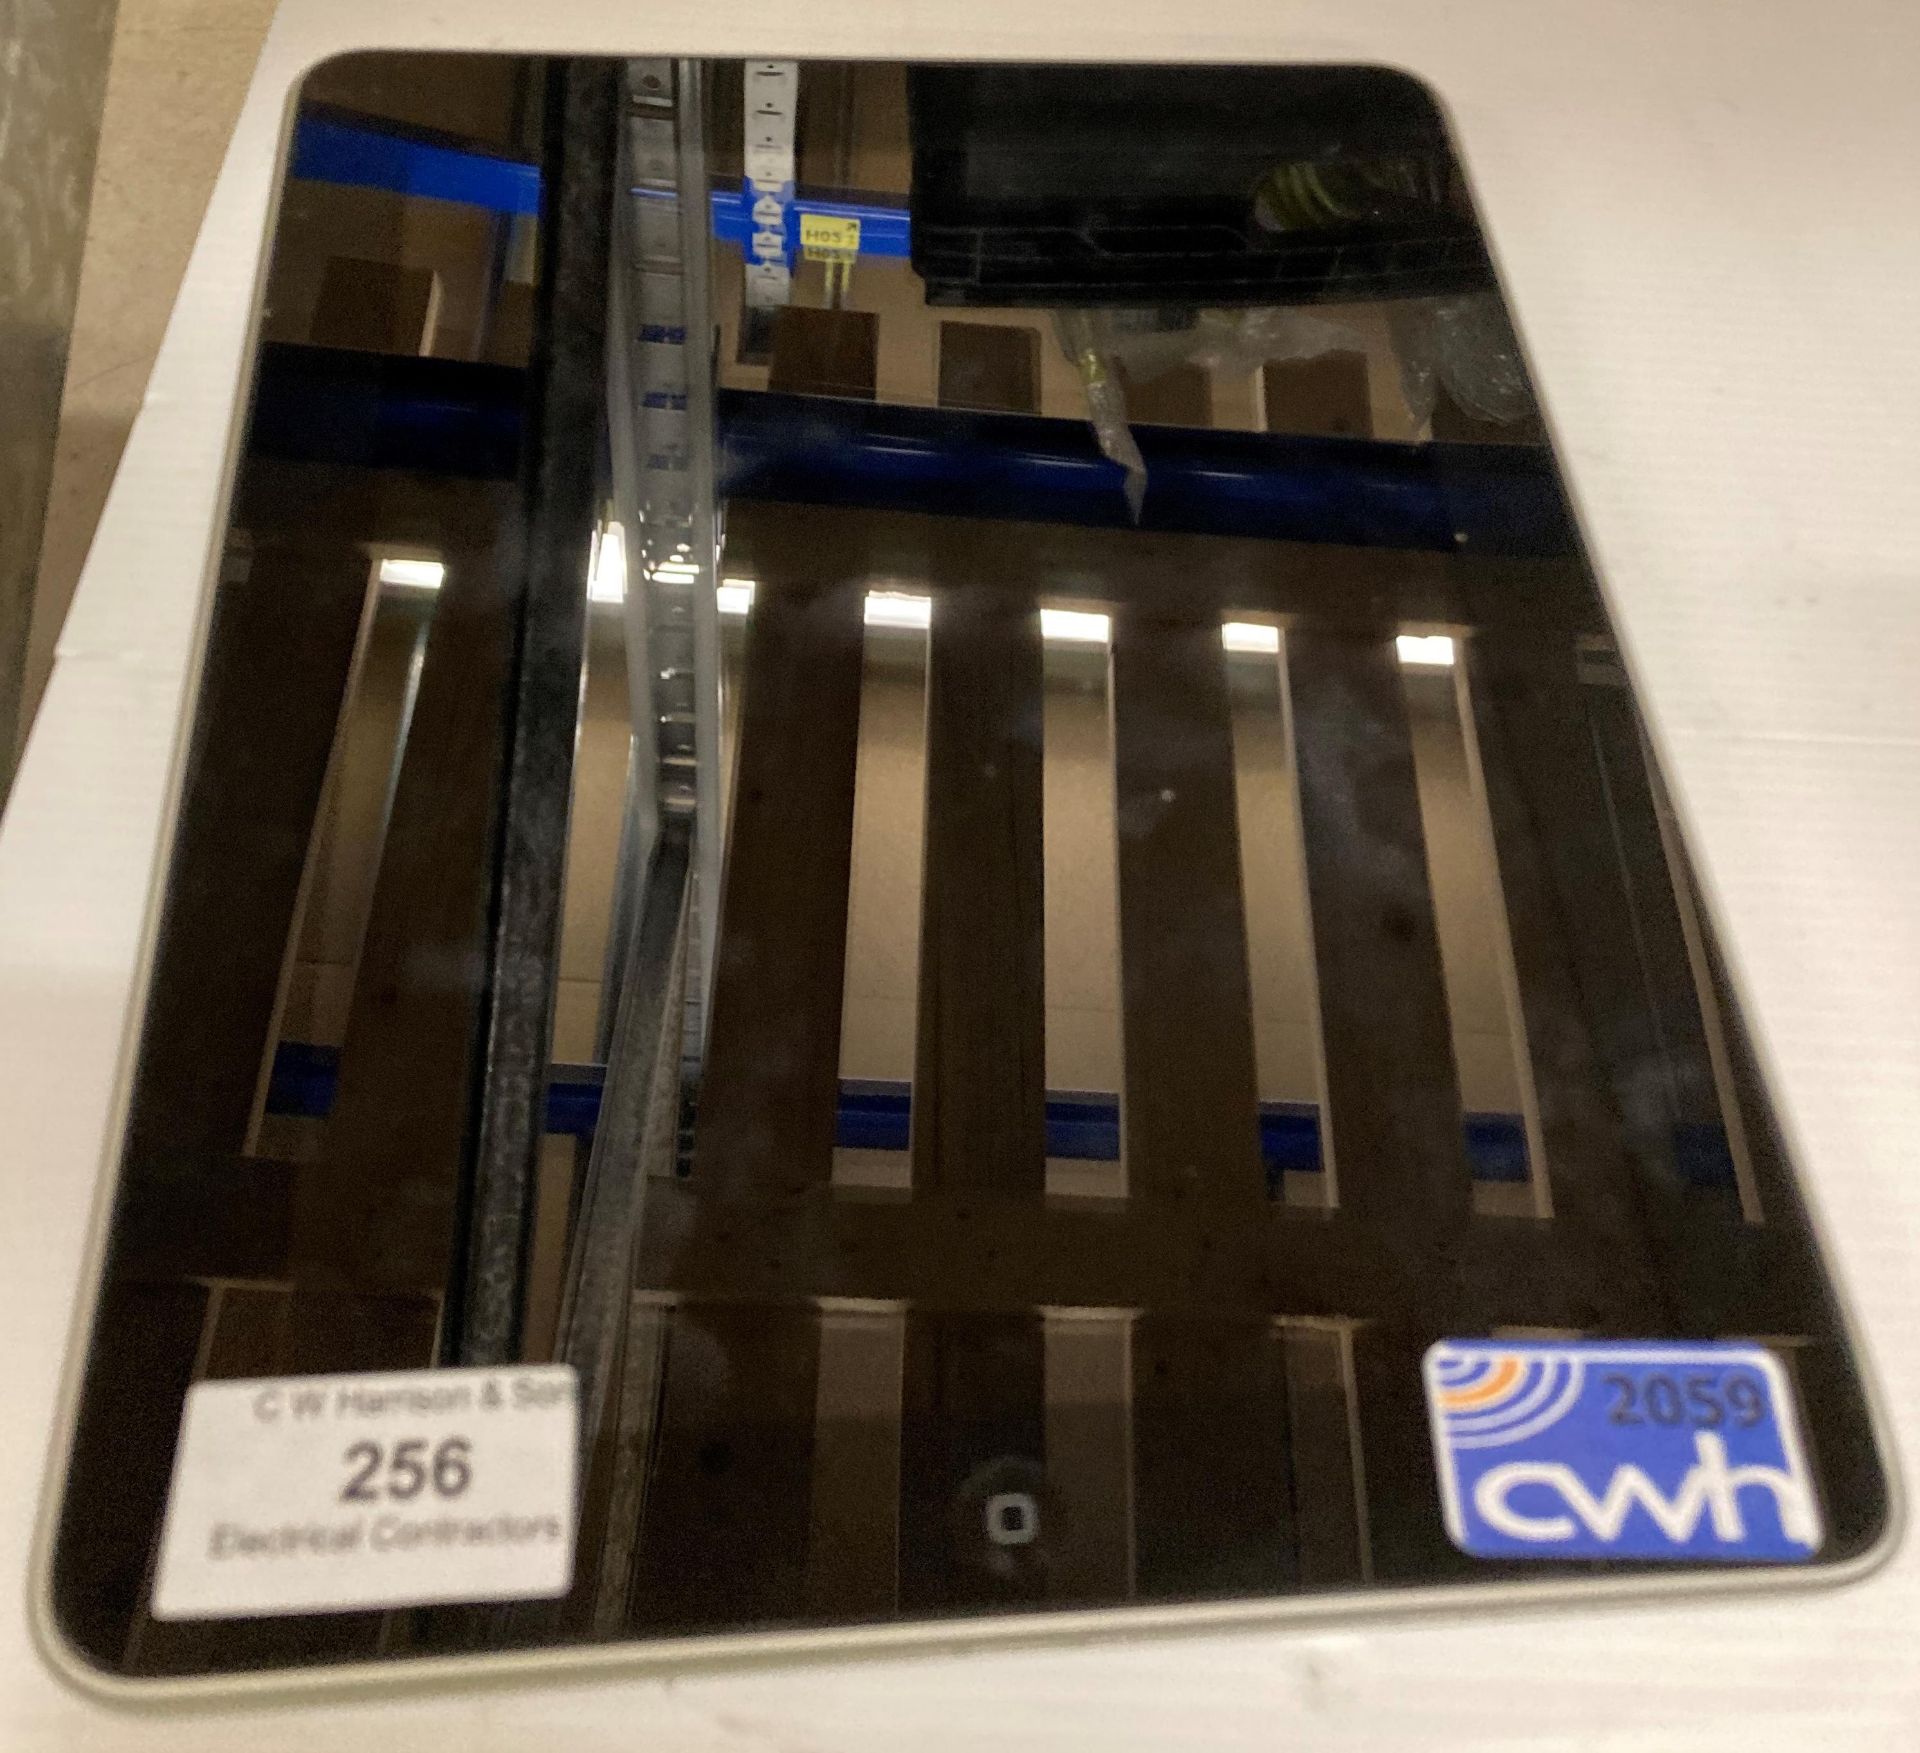 16GB Apple iPad in silver (Saleroom location: F02)